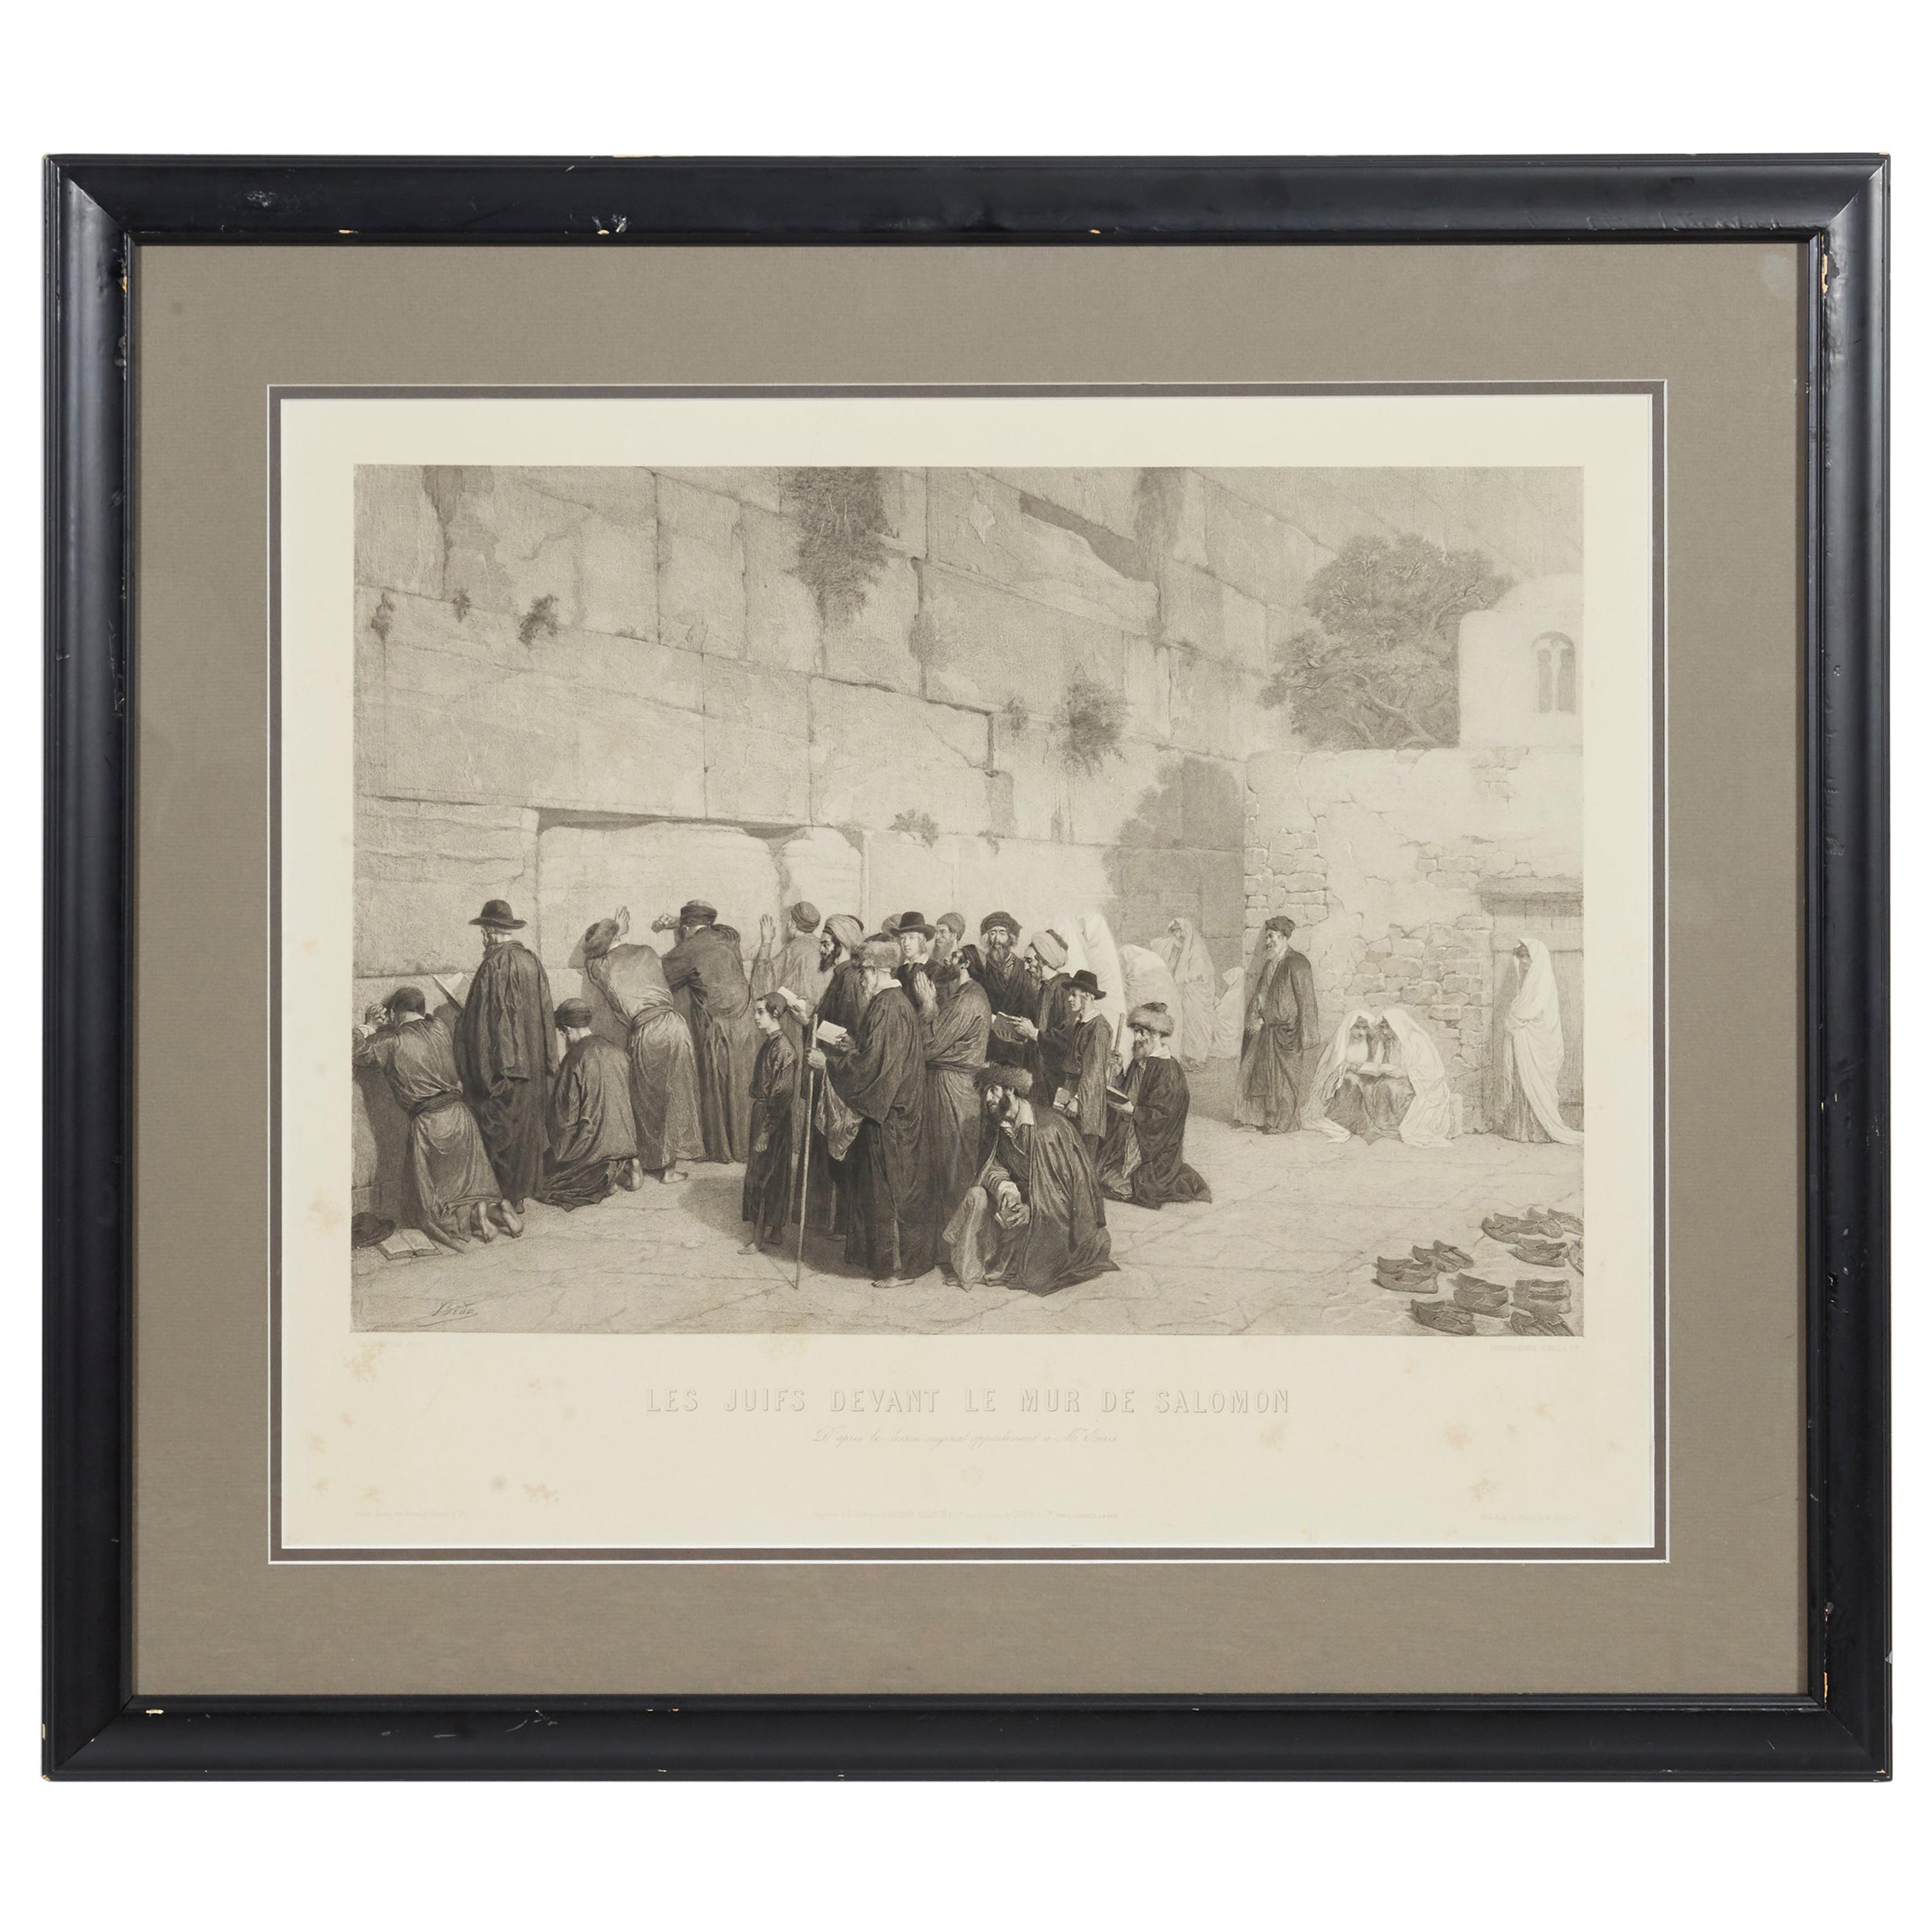 Les Juifs Devant le mur de Salomon:: Juden an der Westmauer:: Kupferstich:: ca. 1880